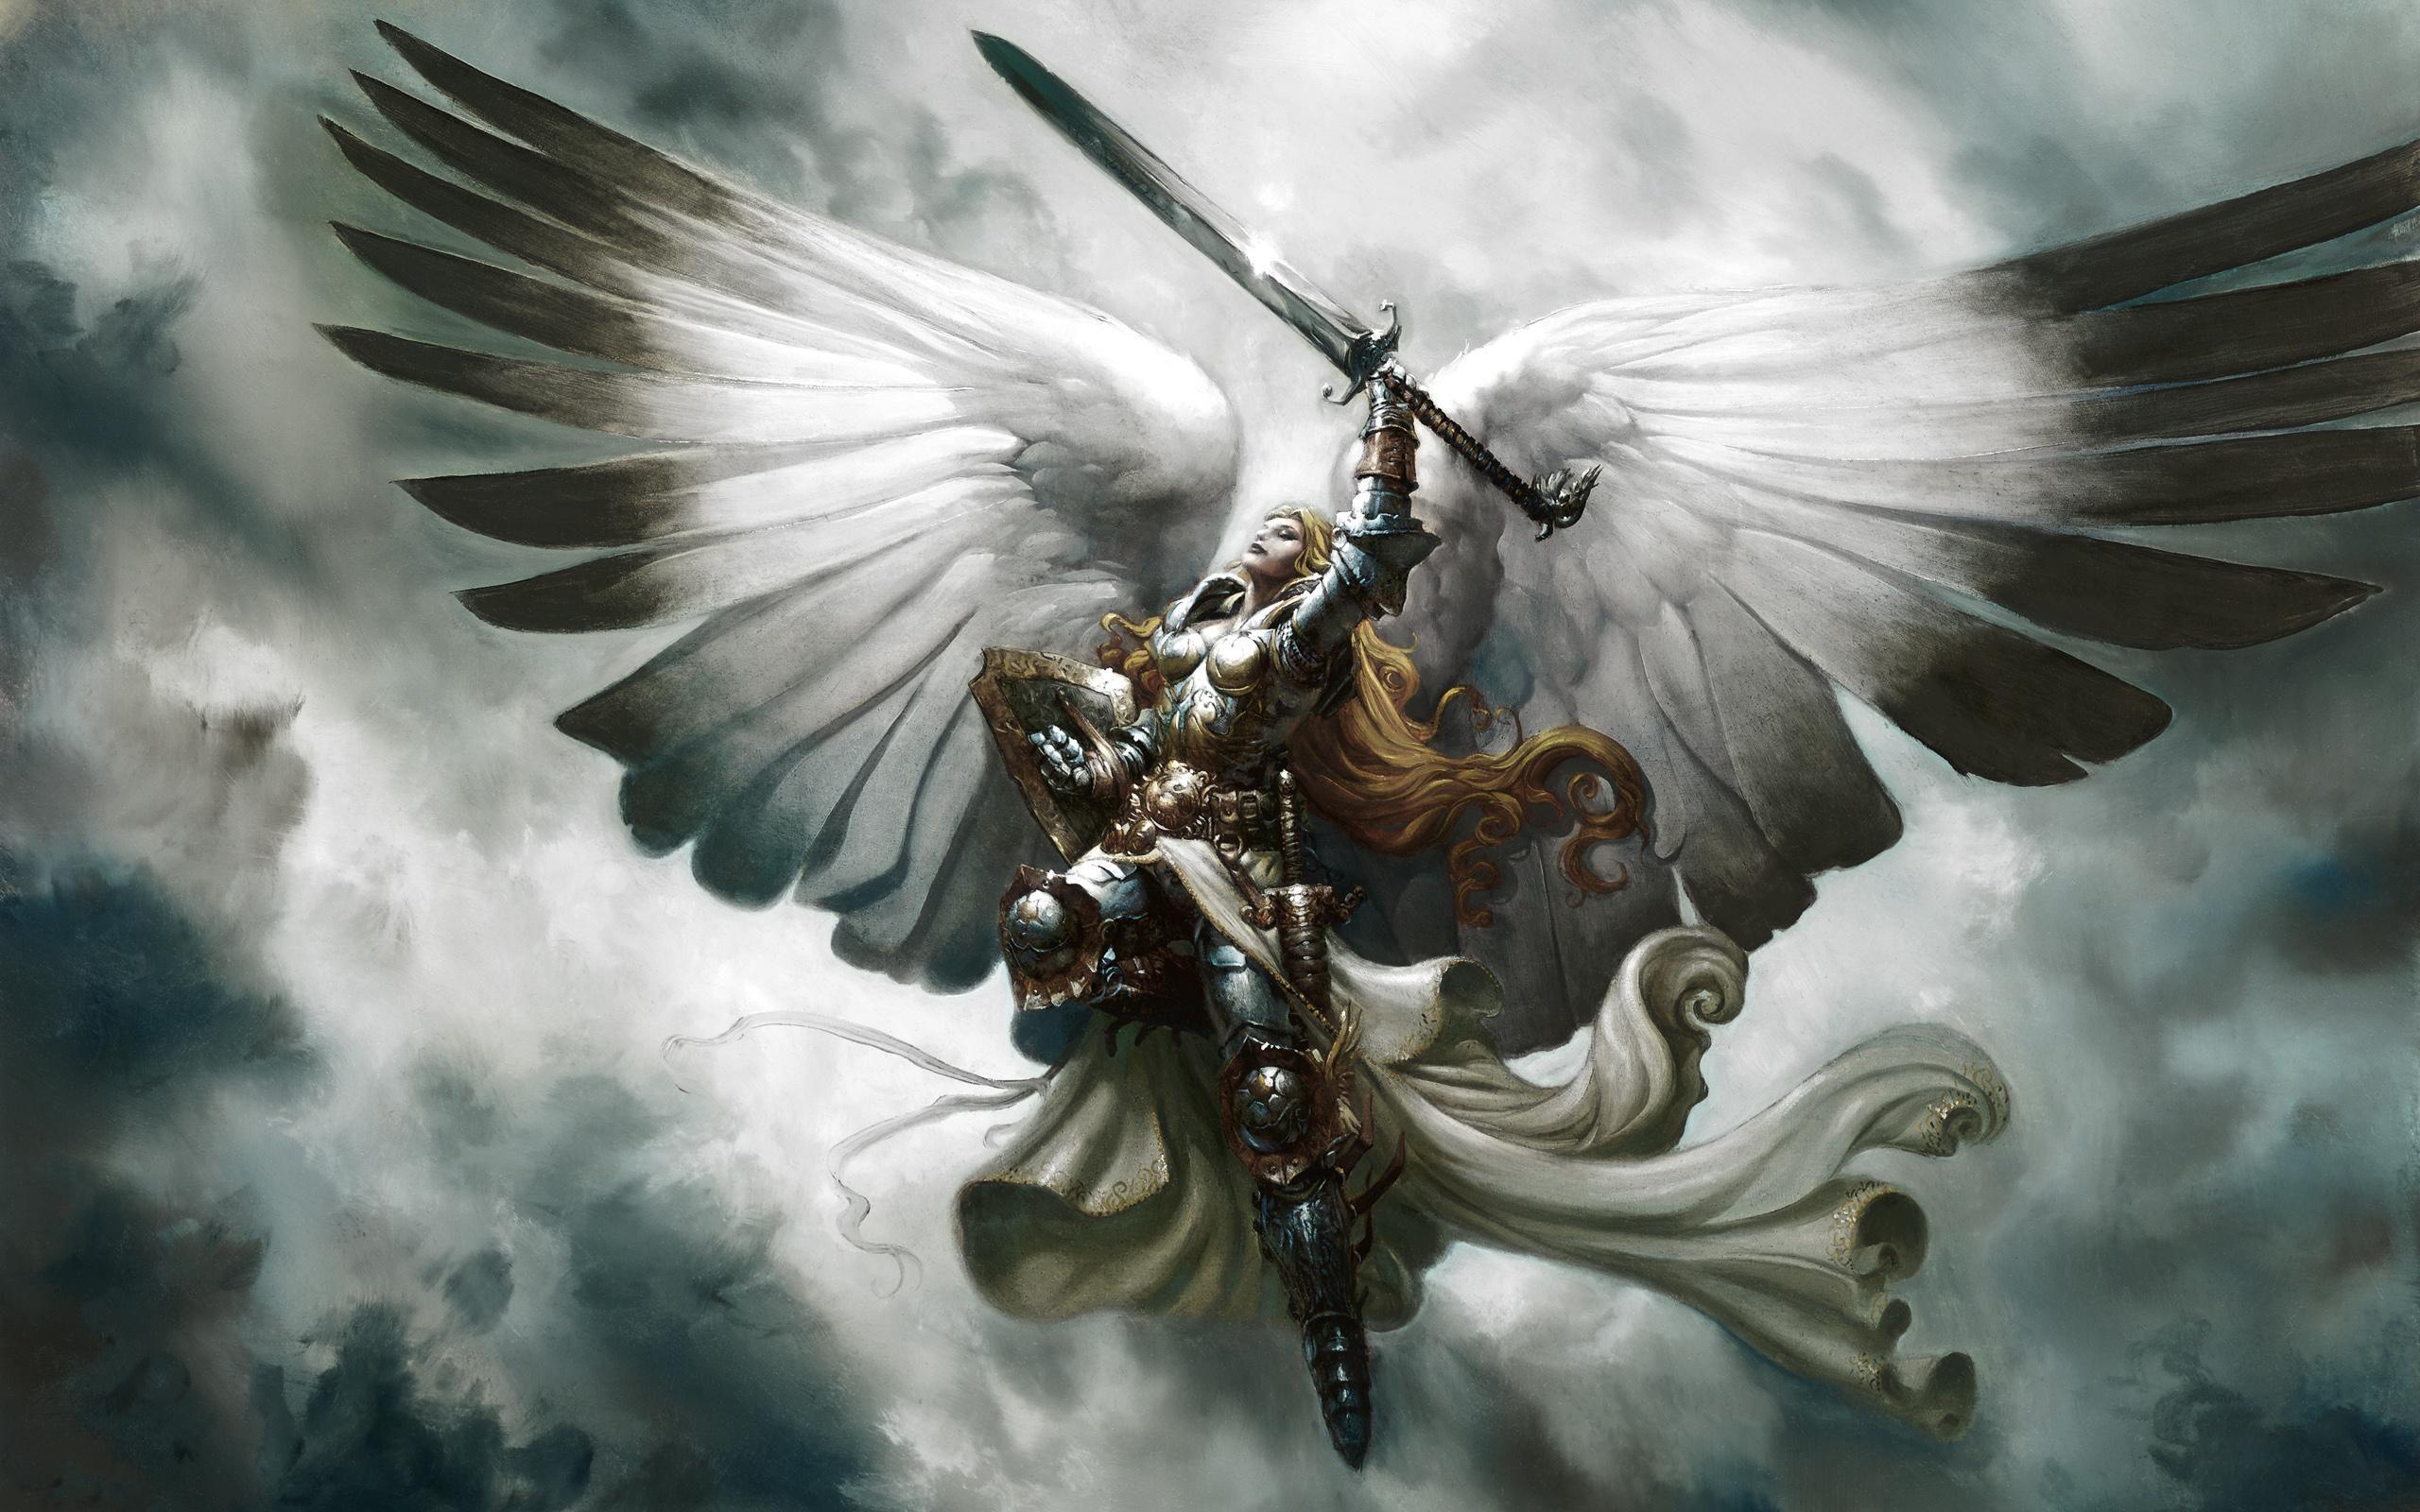 Wallpaper fantasy angel warrior wings art desktop wallpaper hd image  picture background 91c588  wallpapersmug